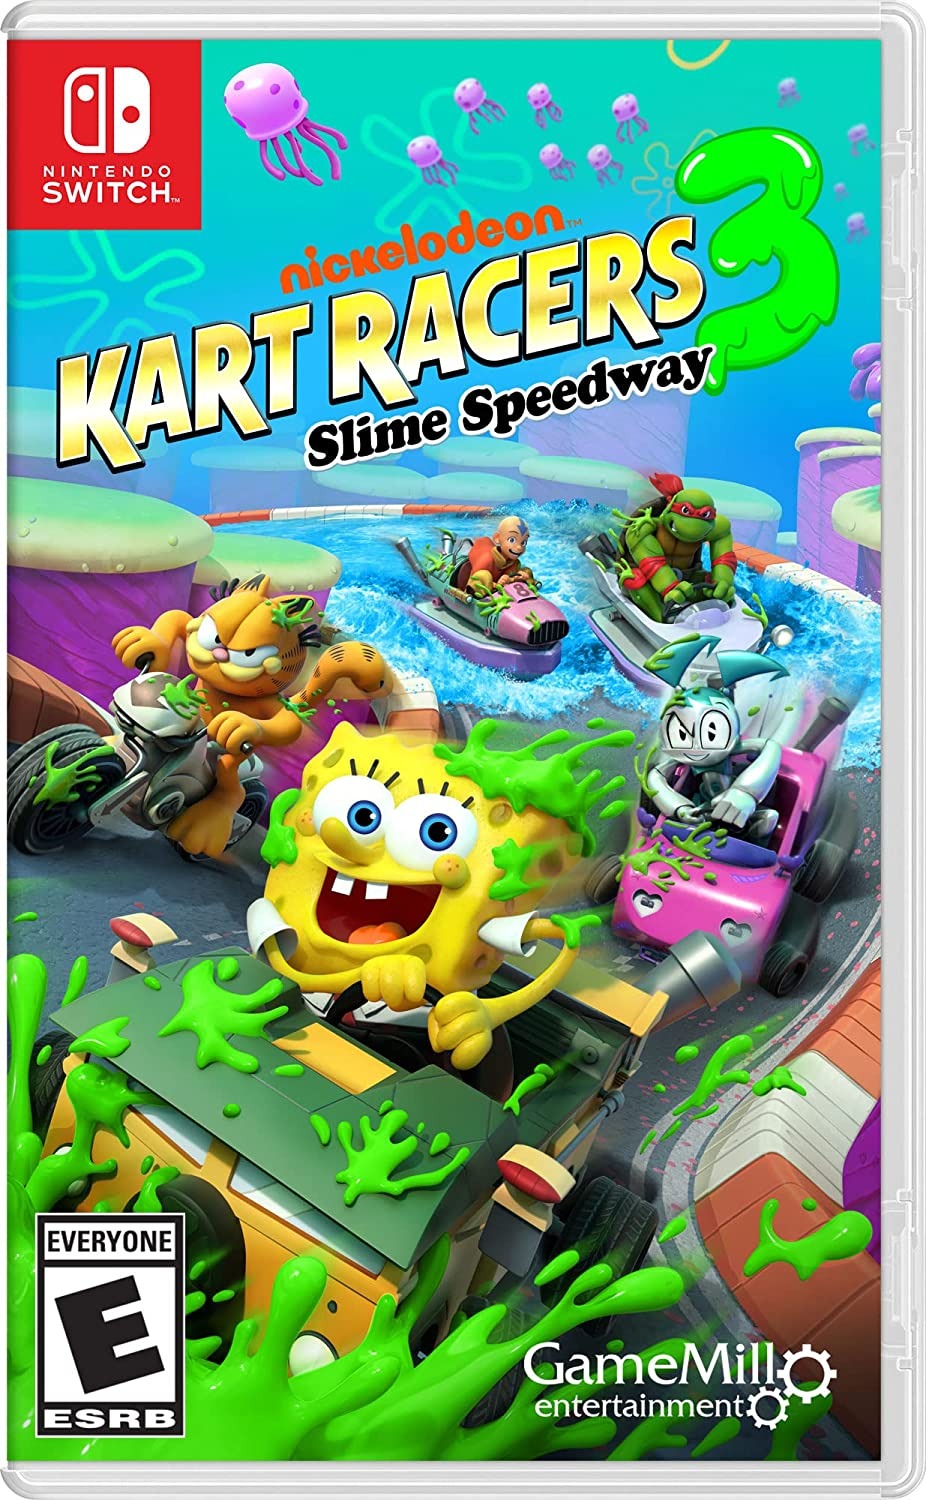 Kart Racers 3 Slime Speedway